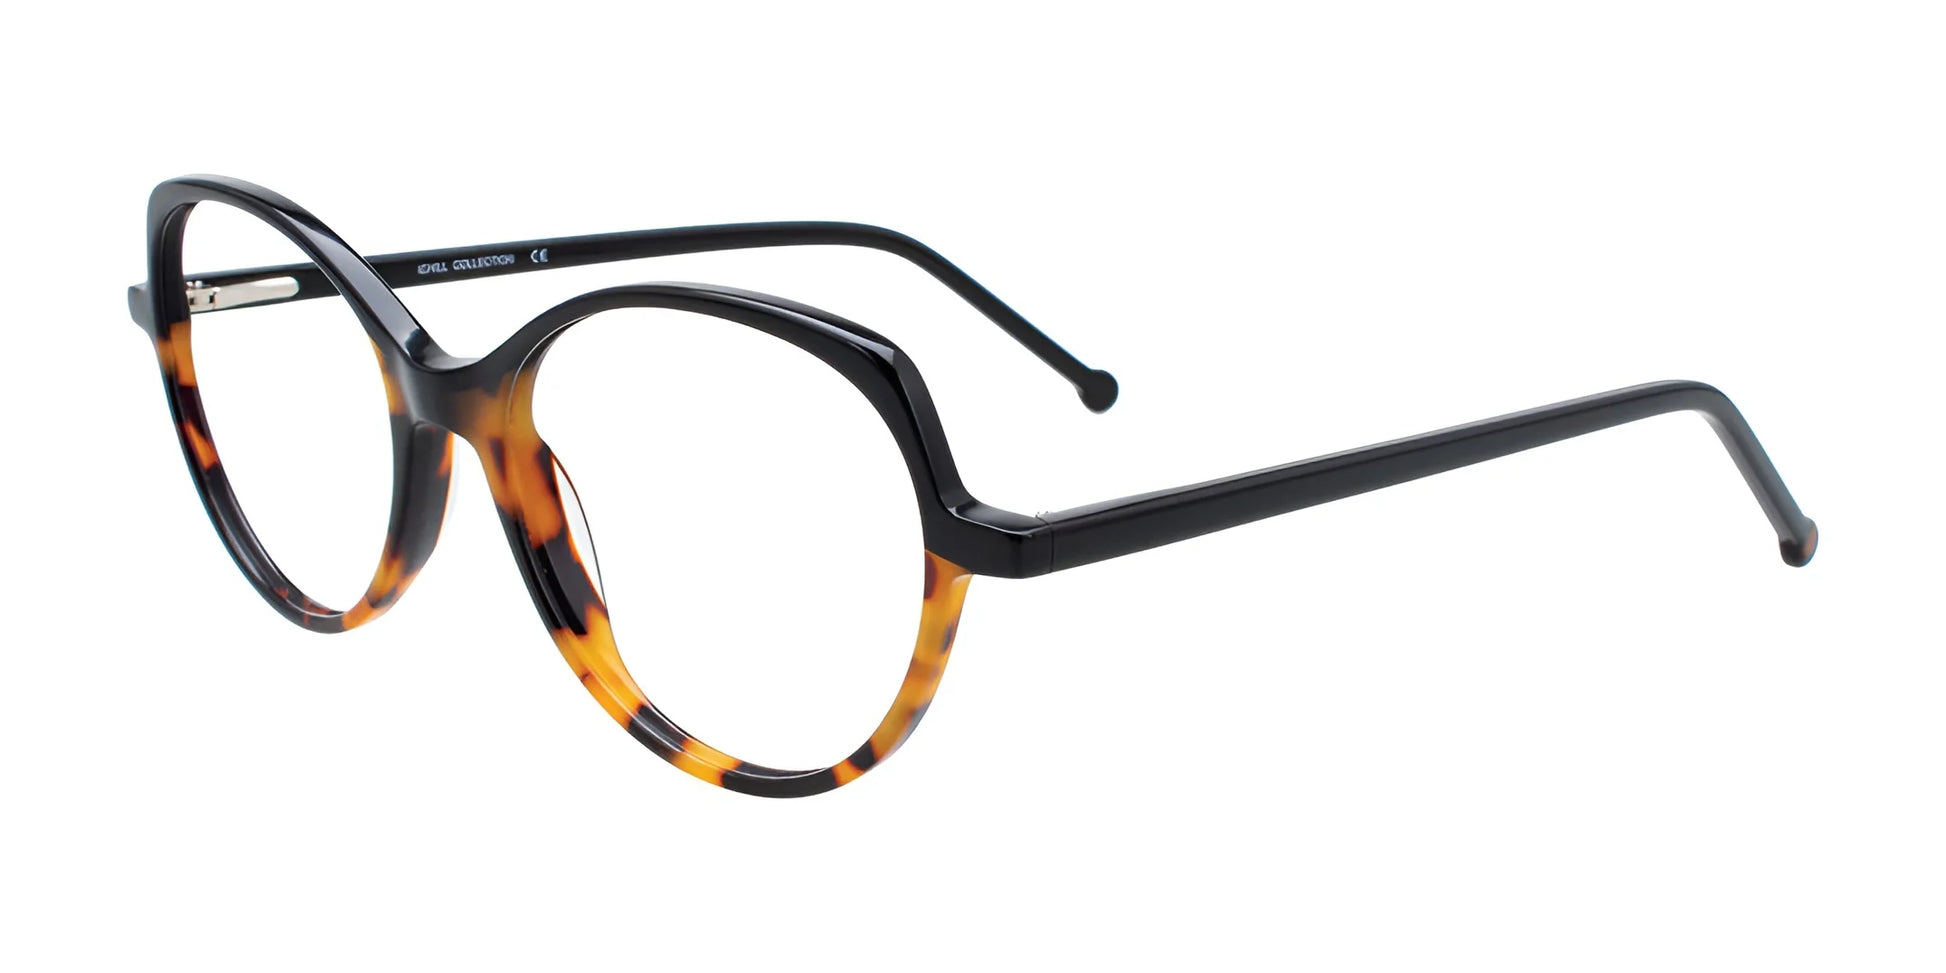 iCHILL C7040 Eyeglasses Black & Demi Amber / Black